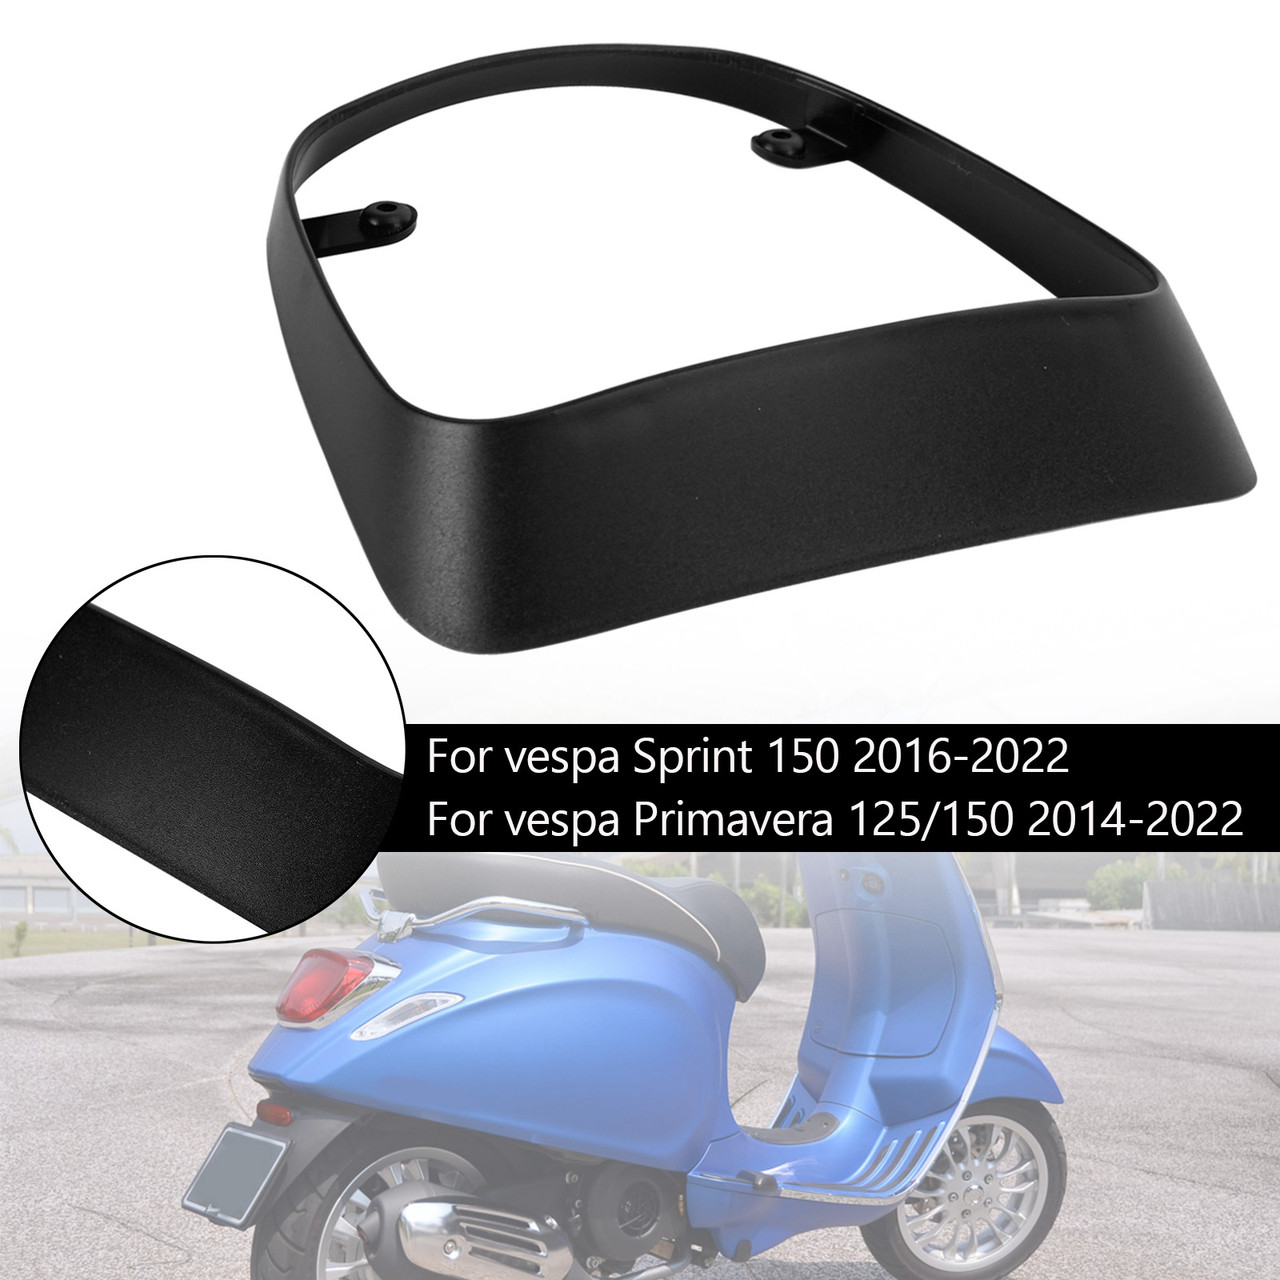 Tail Light Cover Rear Lamp Guard Sprint Primavera 125/150 2014-2022 Black